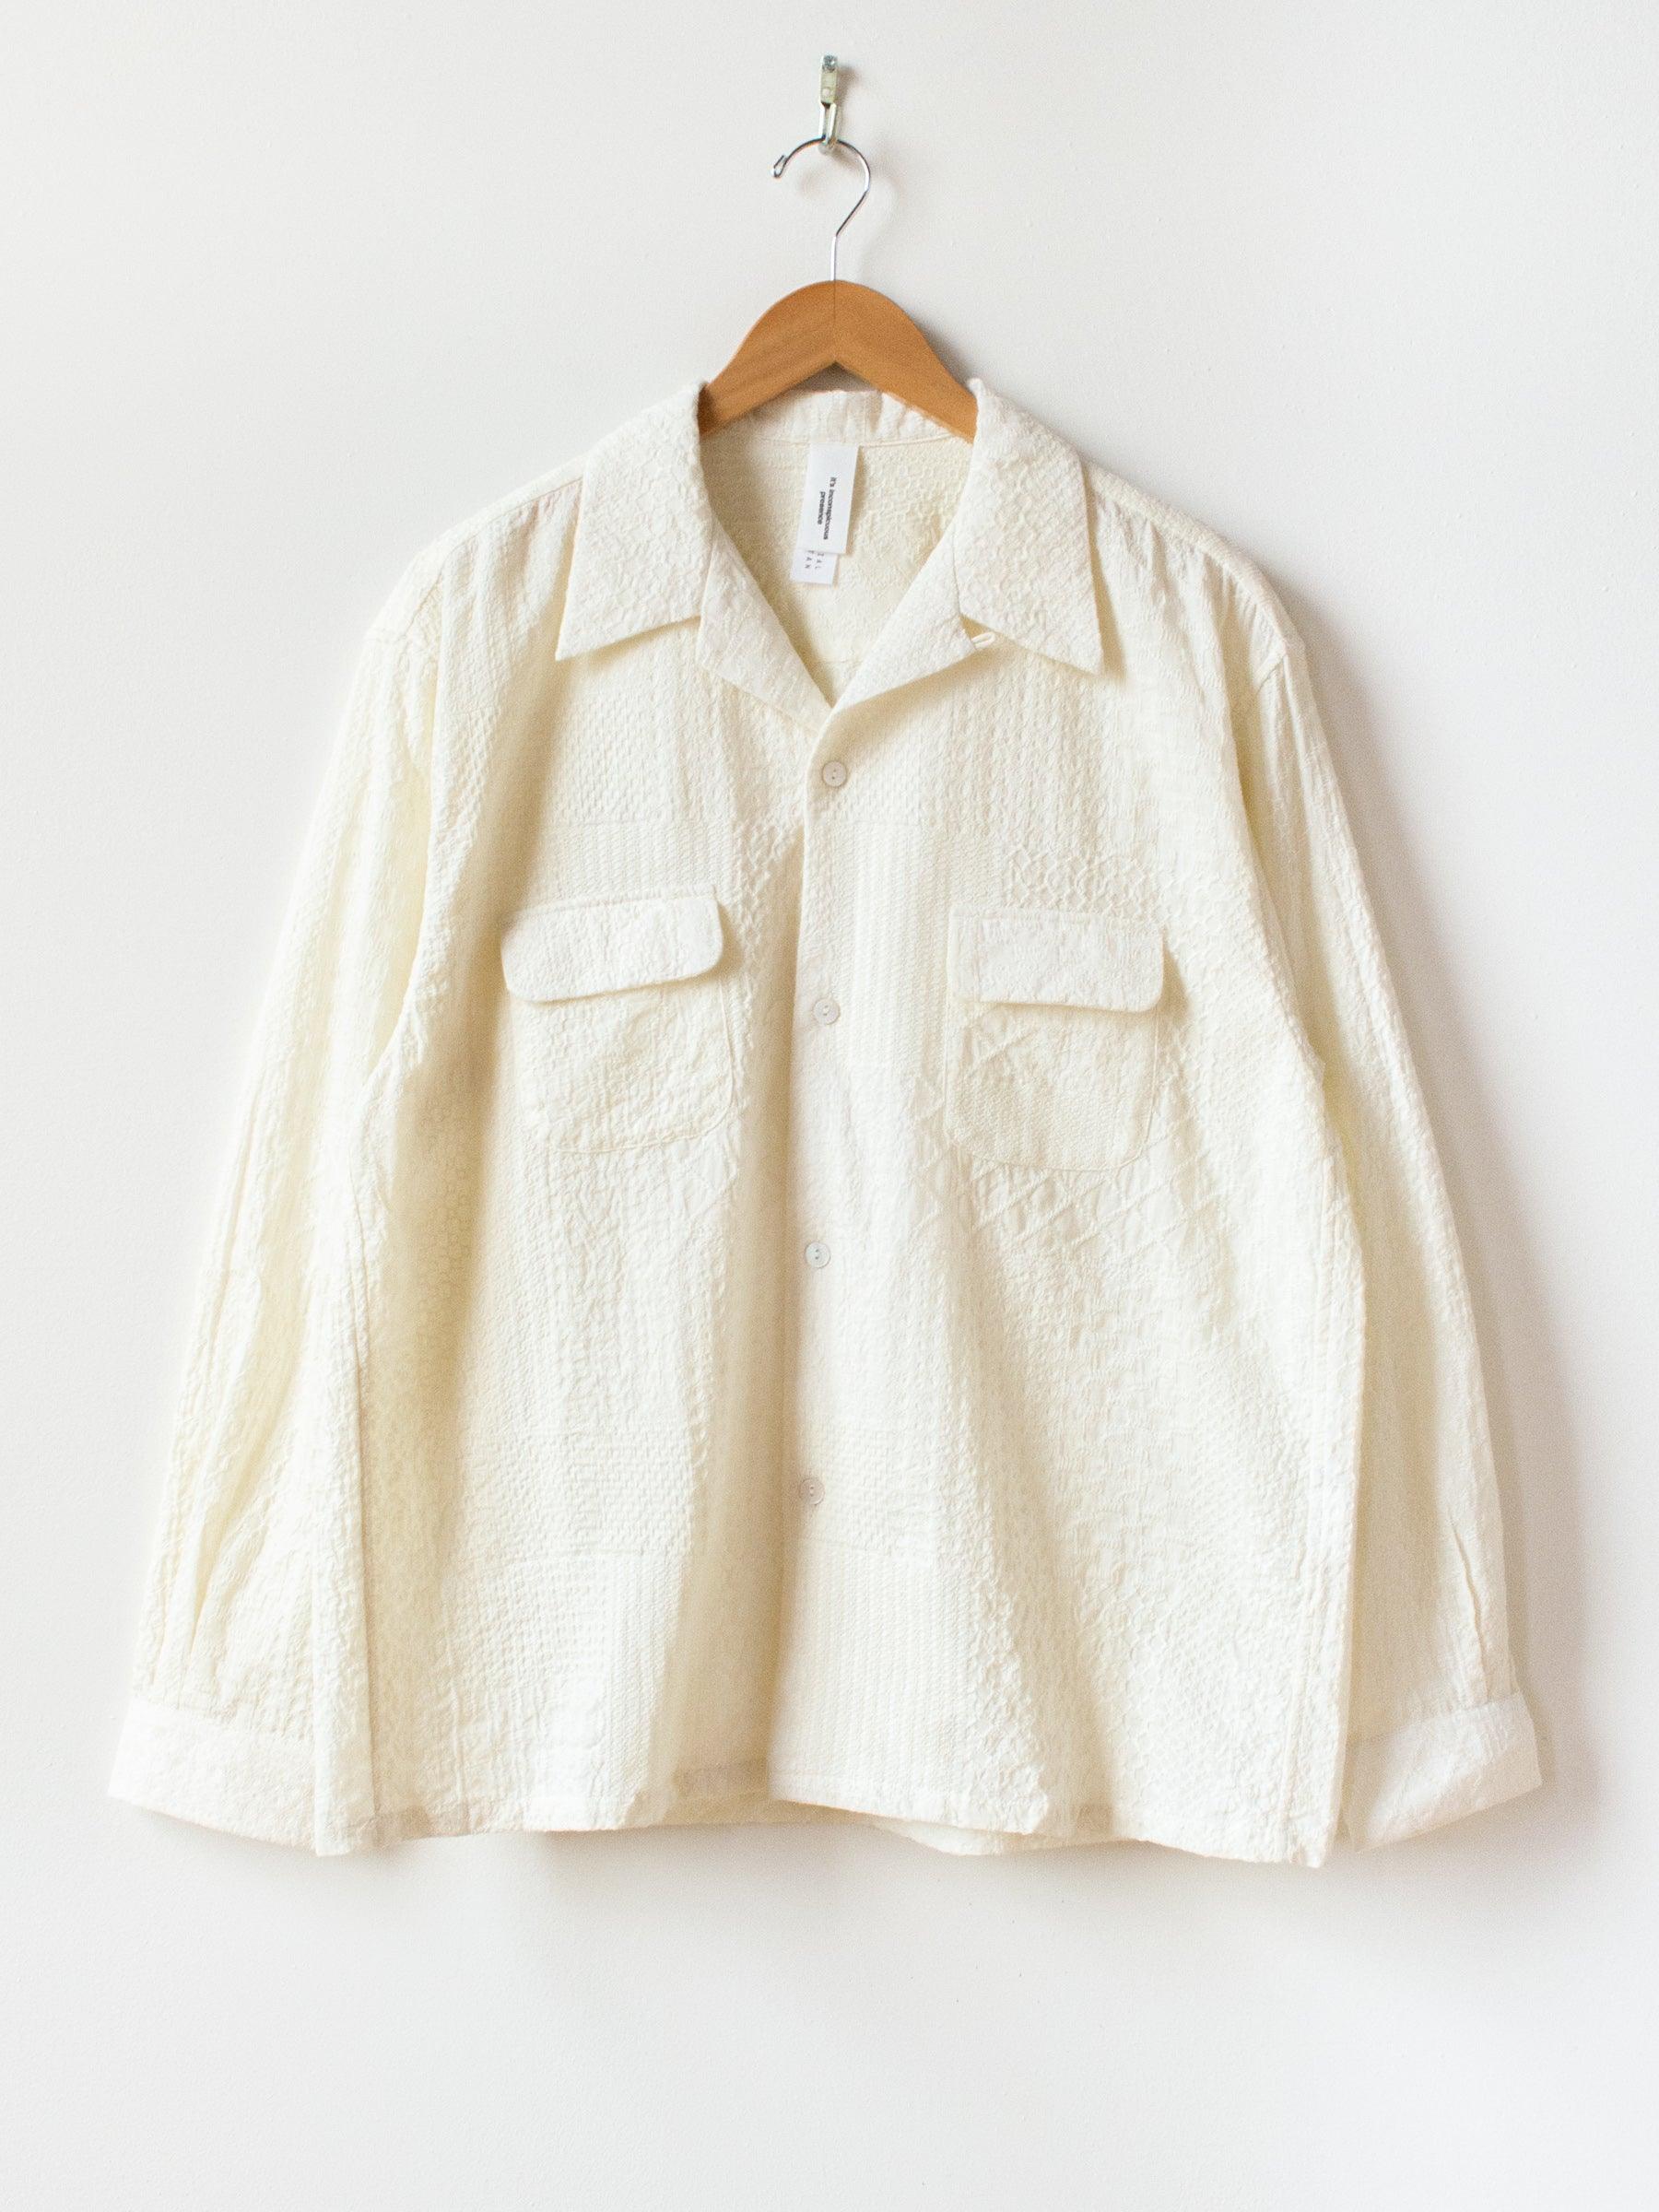 Namu Shop - Niche Crazy Lace Open Collar Shirt - White